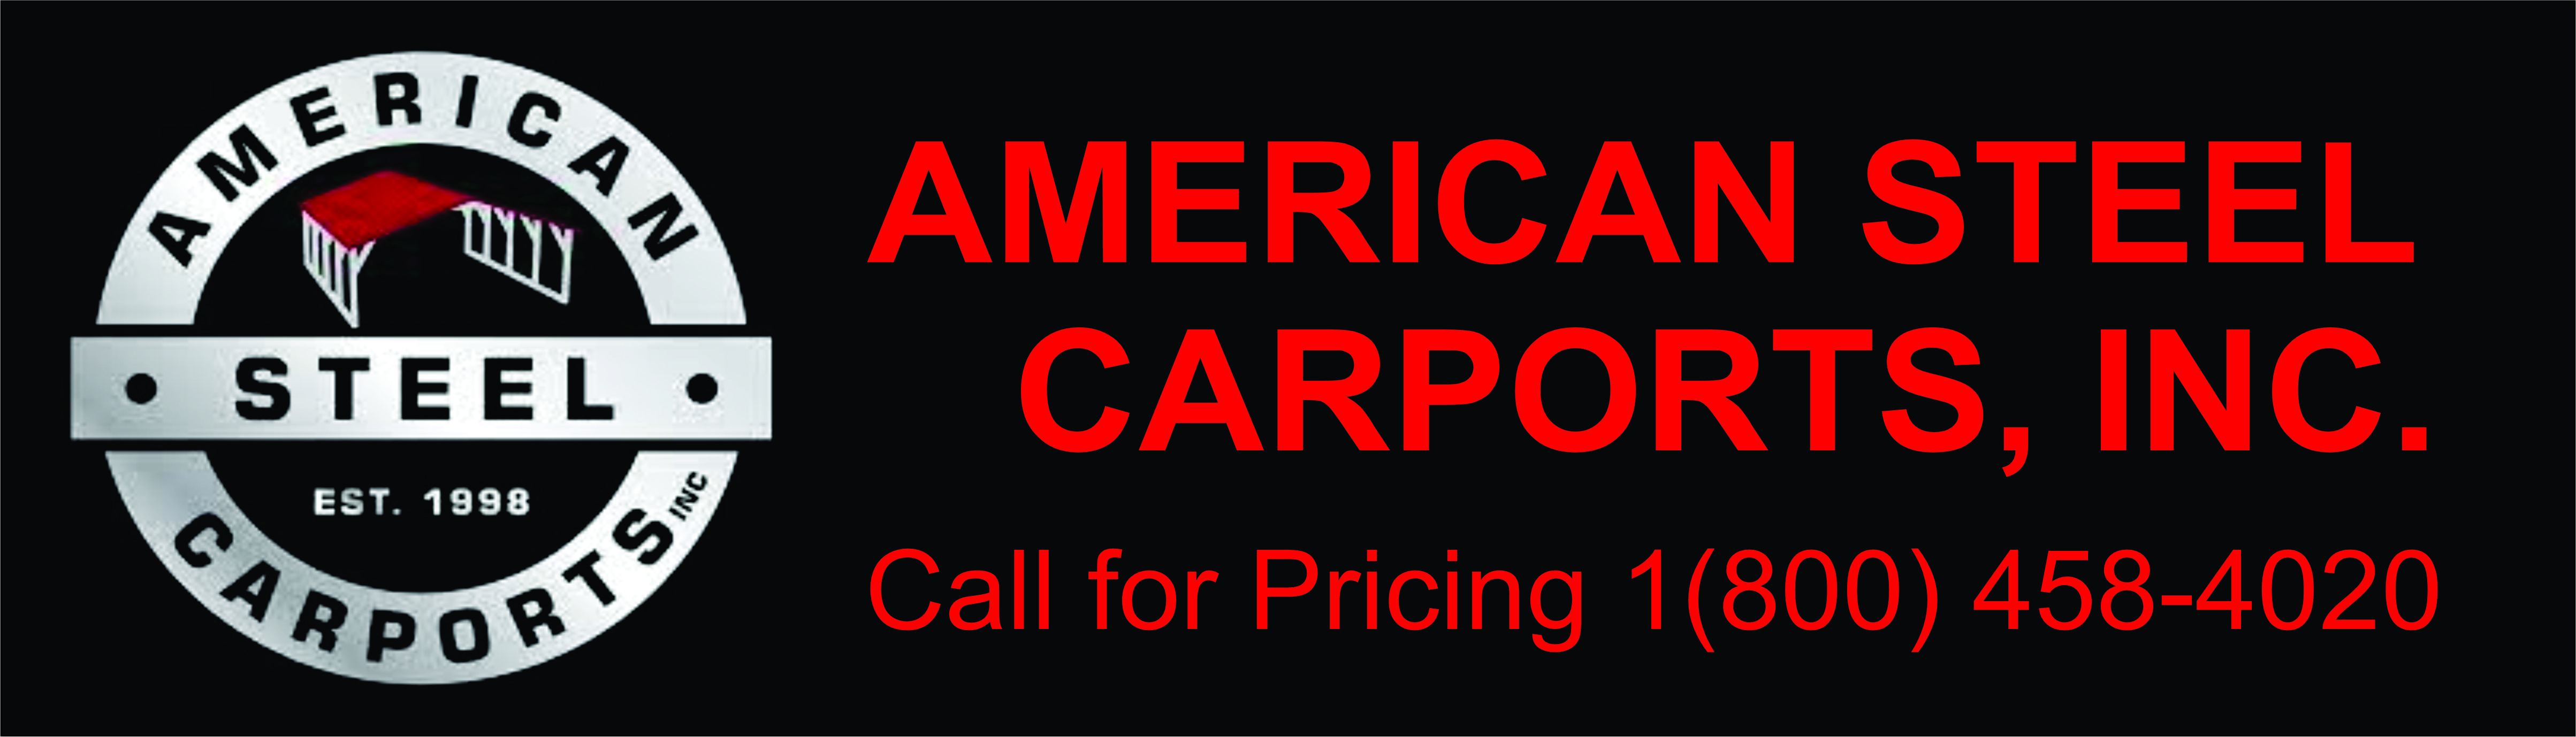 American Steel Carports, Inc.